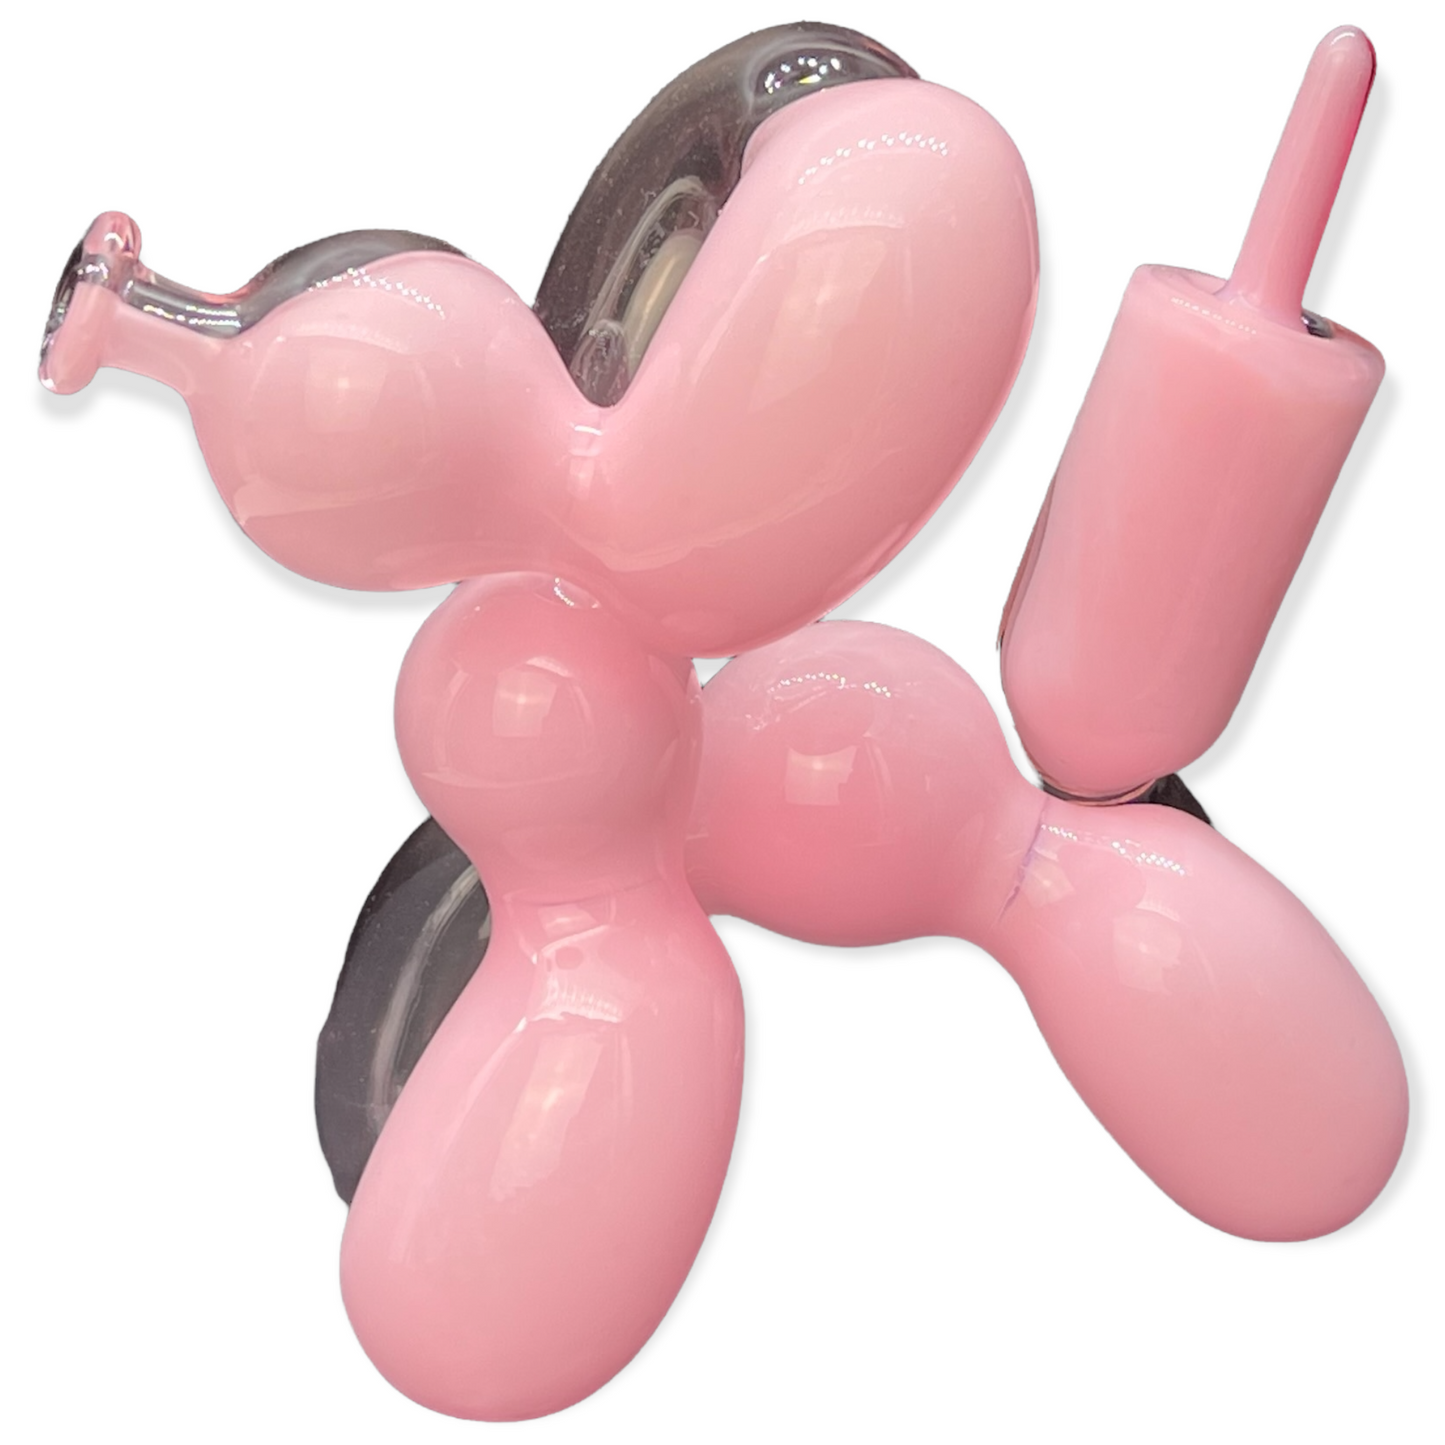 Blitzkriega - Mini Balloon Dog